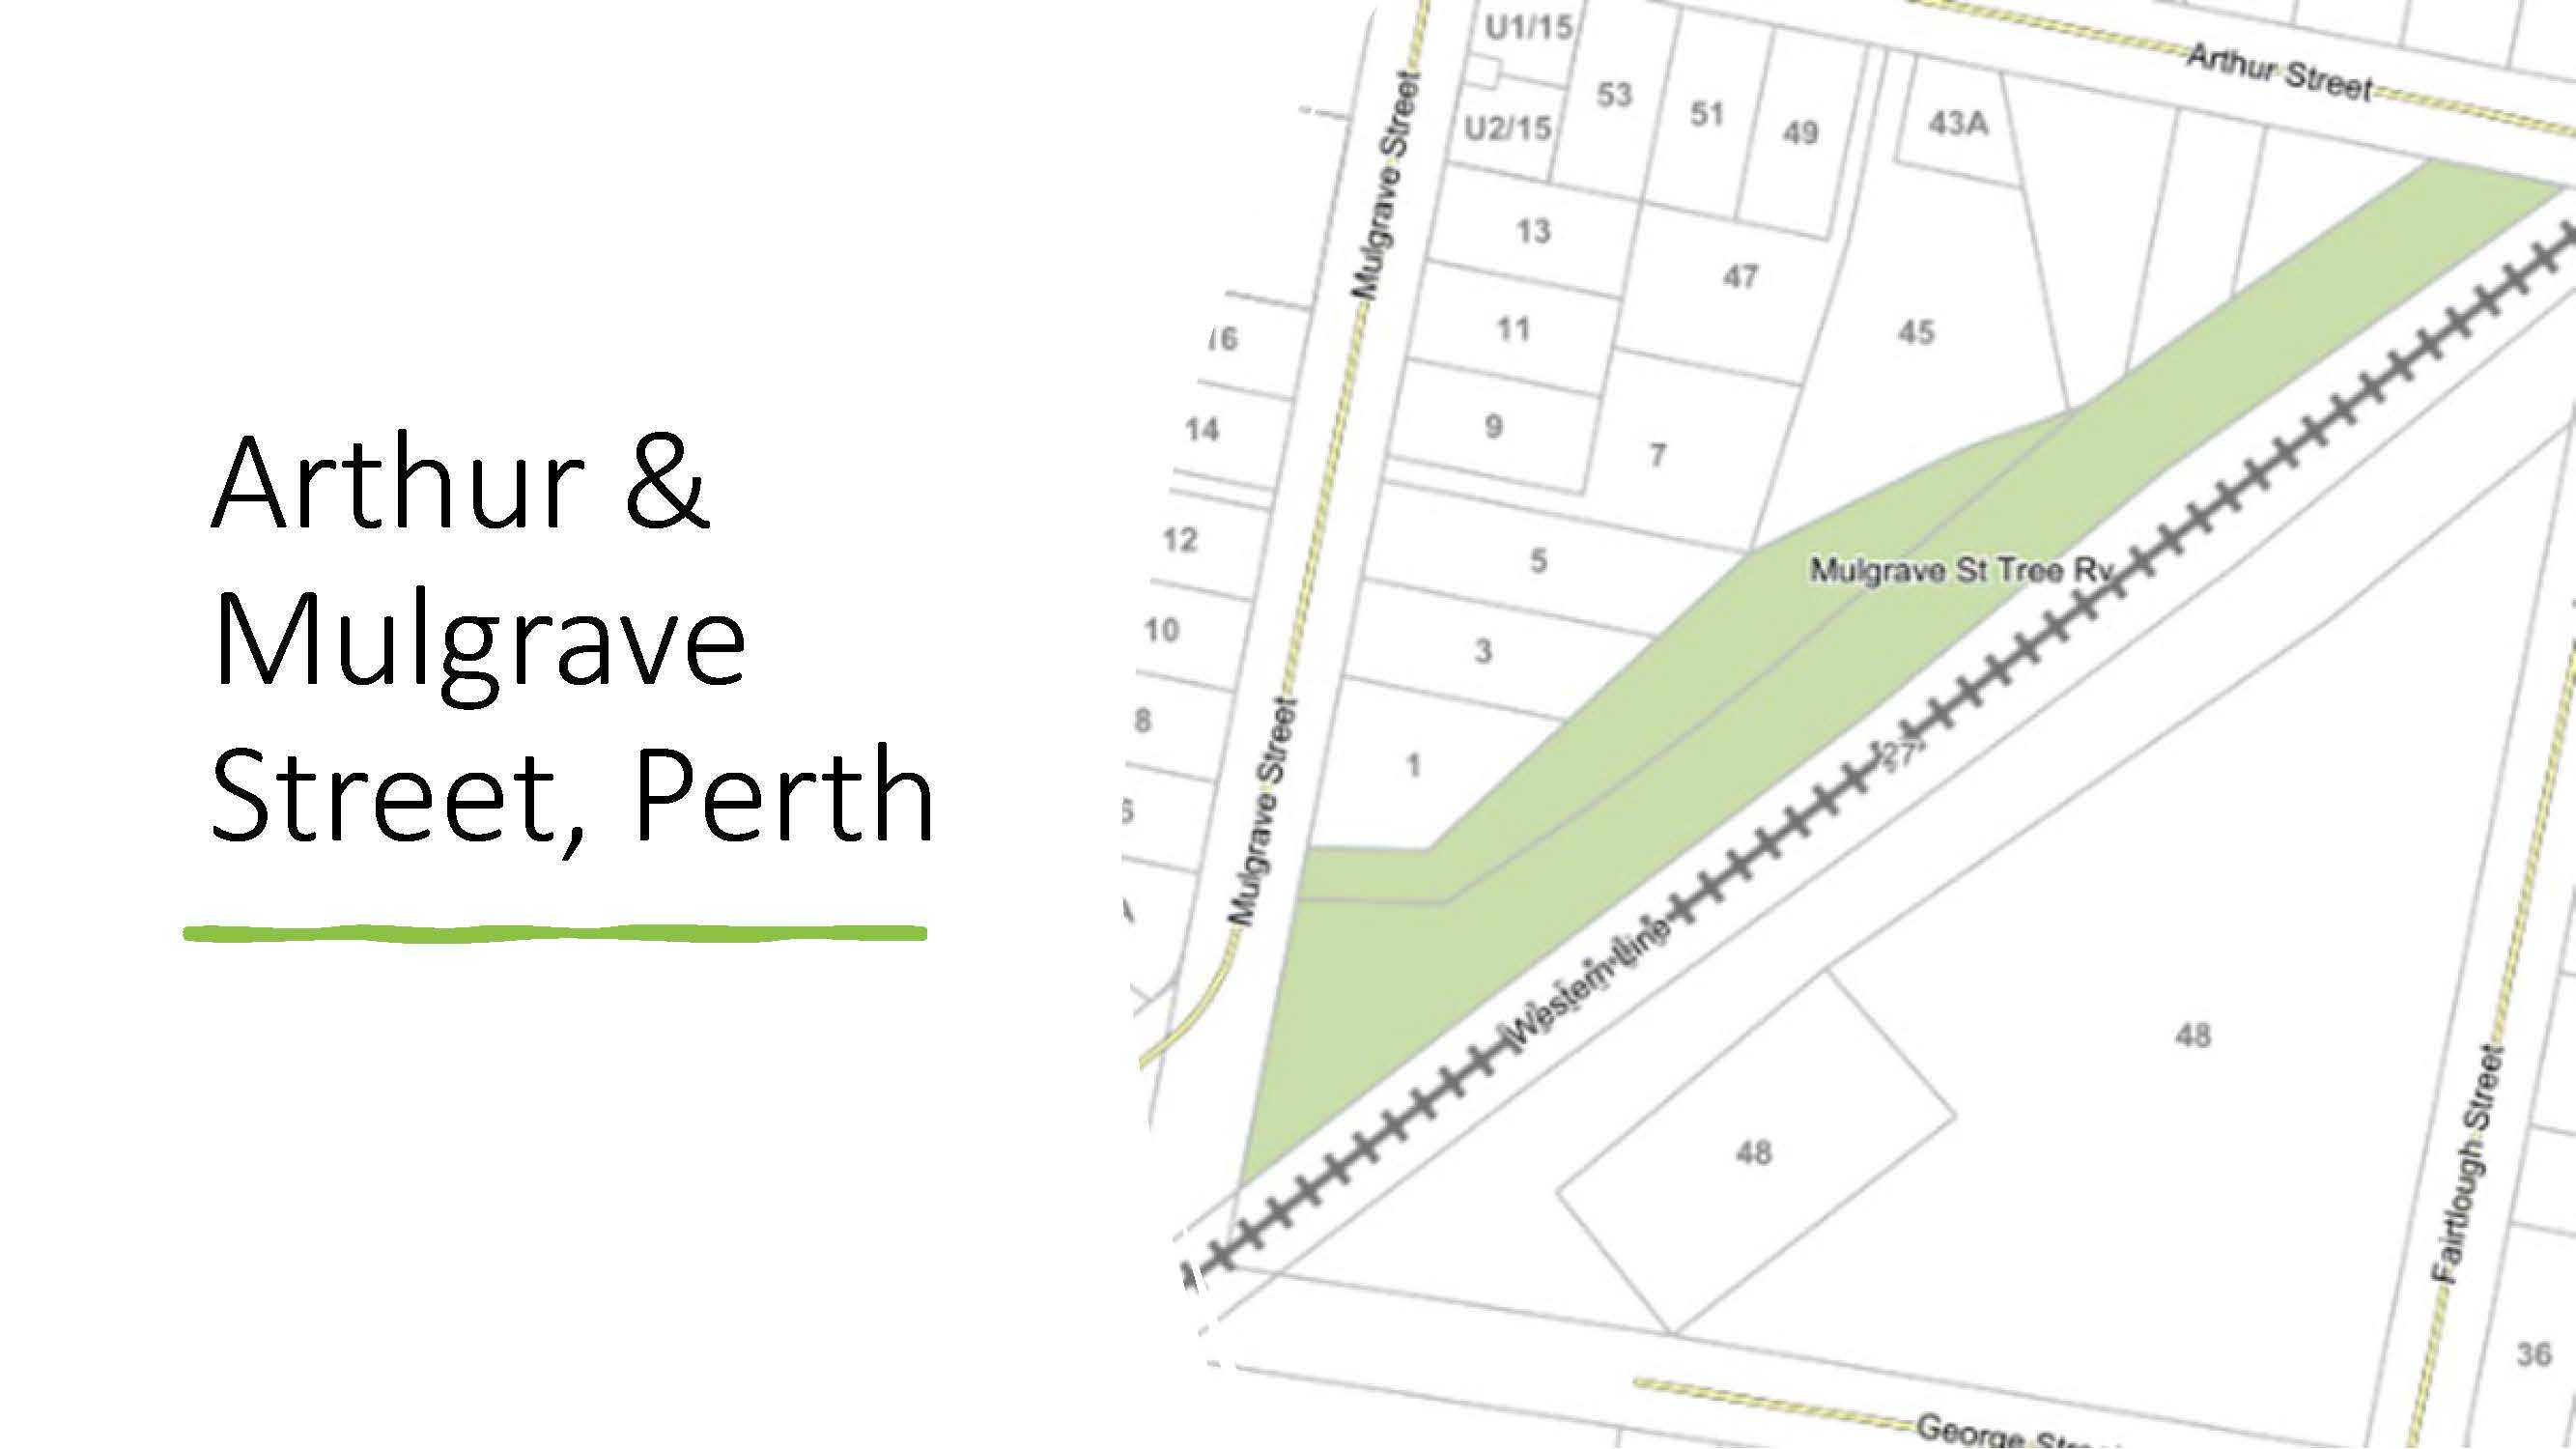 Dog Park - Mulgrave and Arthur Street, Perth